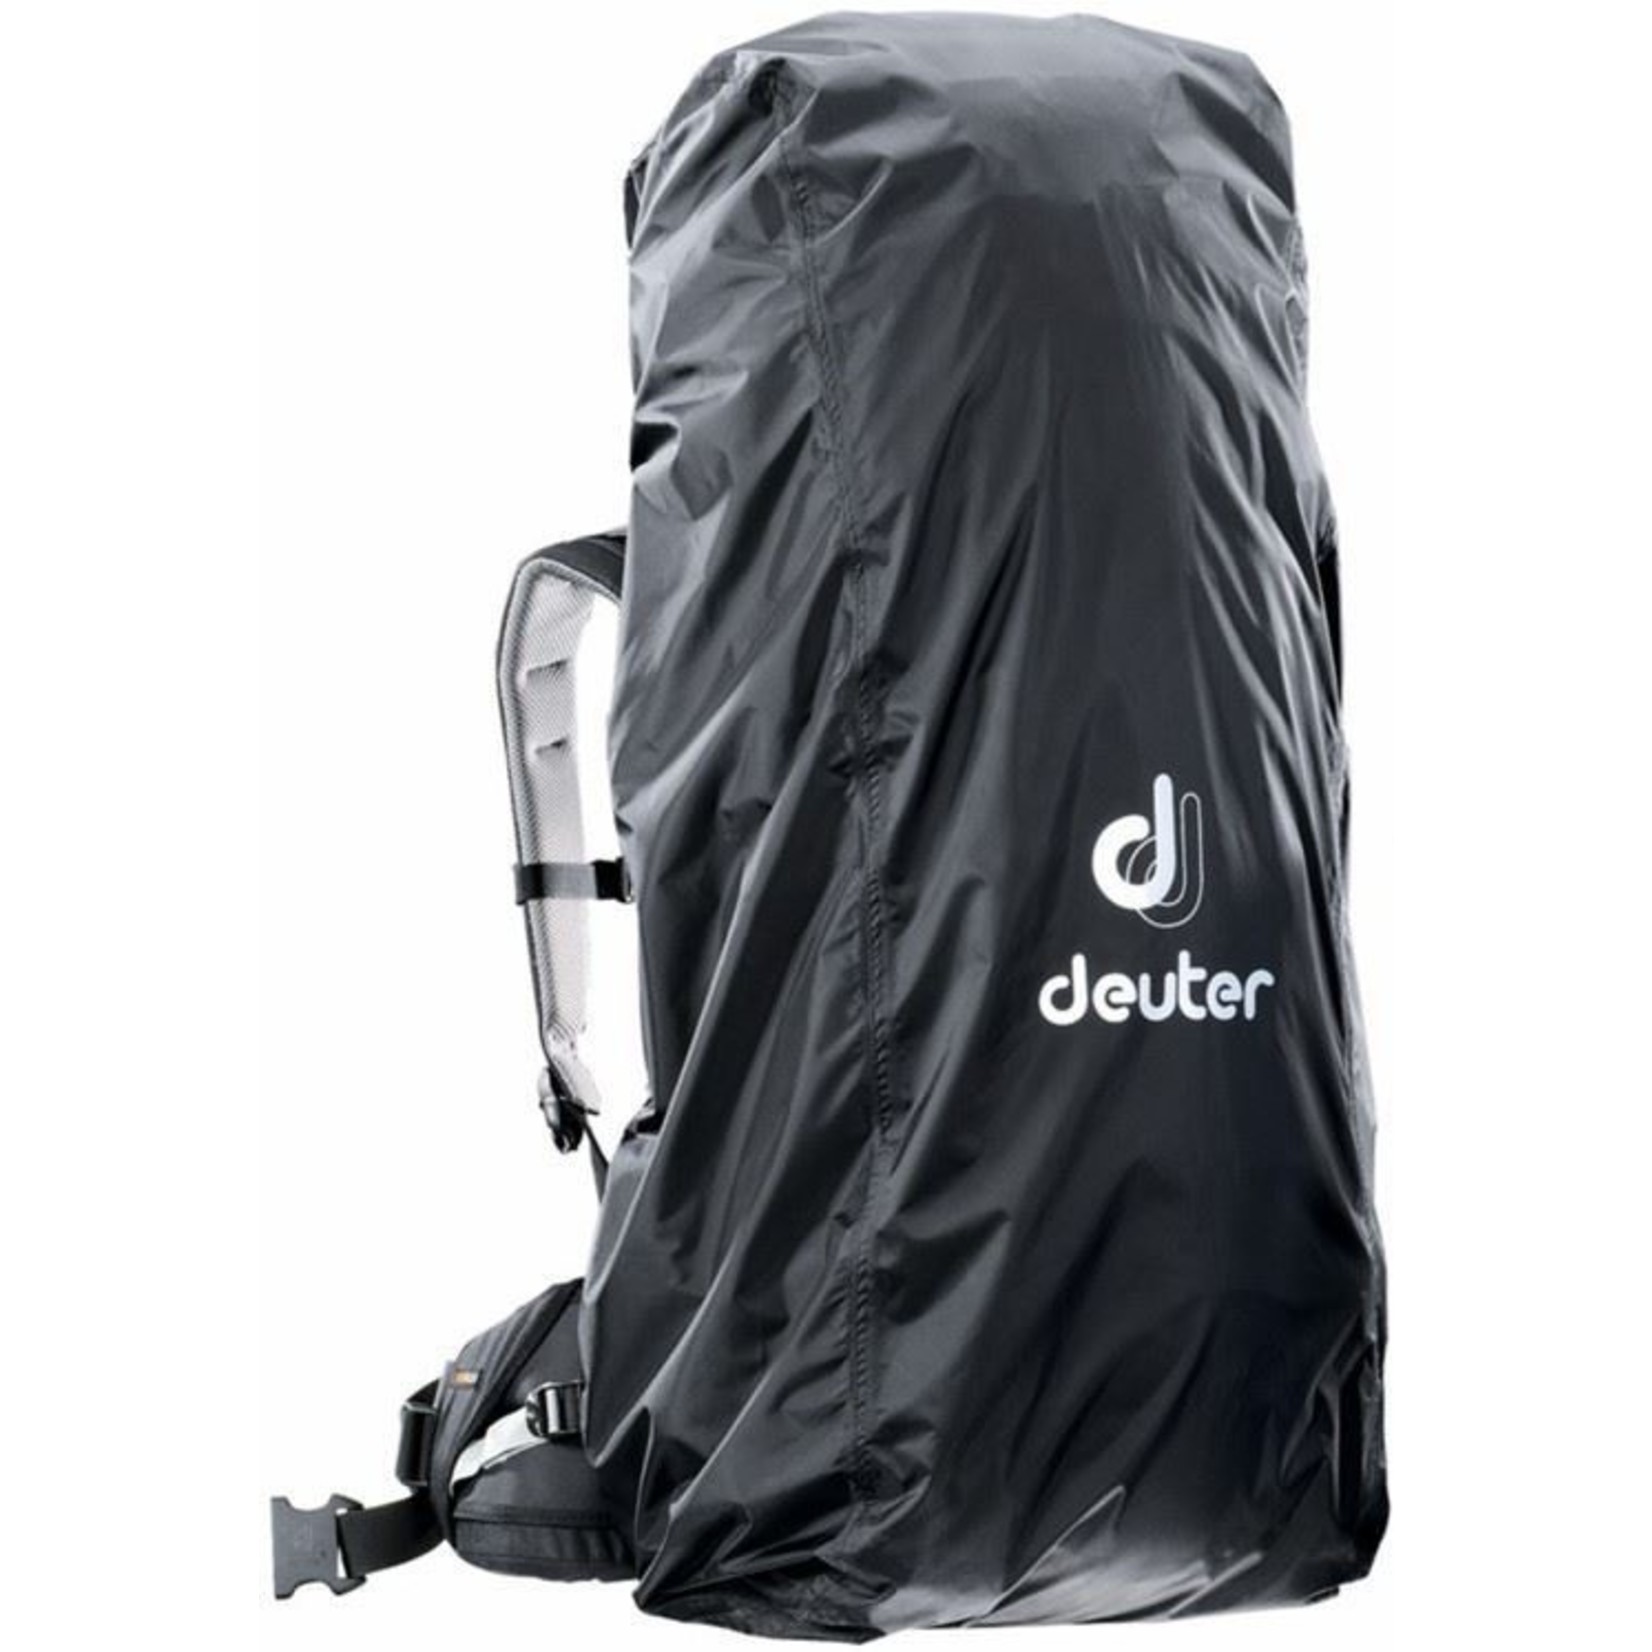 Deuter Deuter Raincover Adjustable - Cobalt